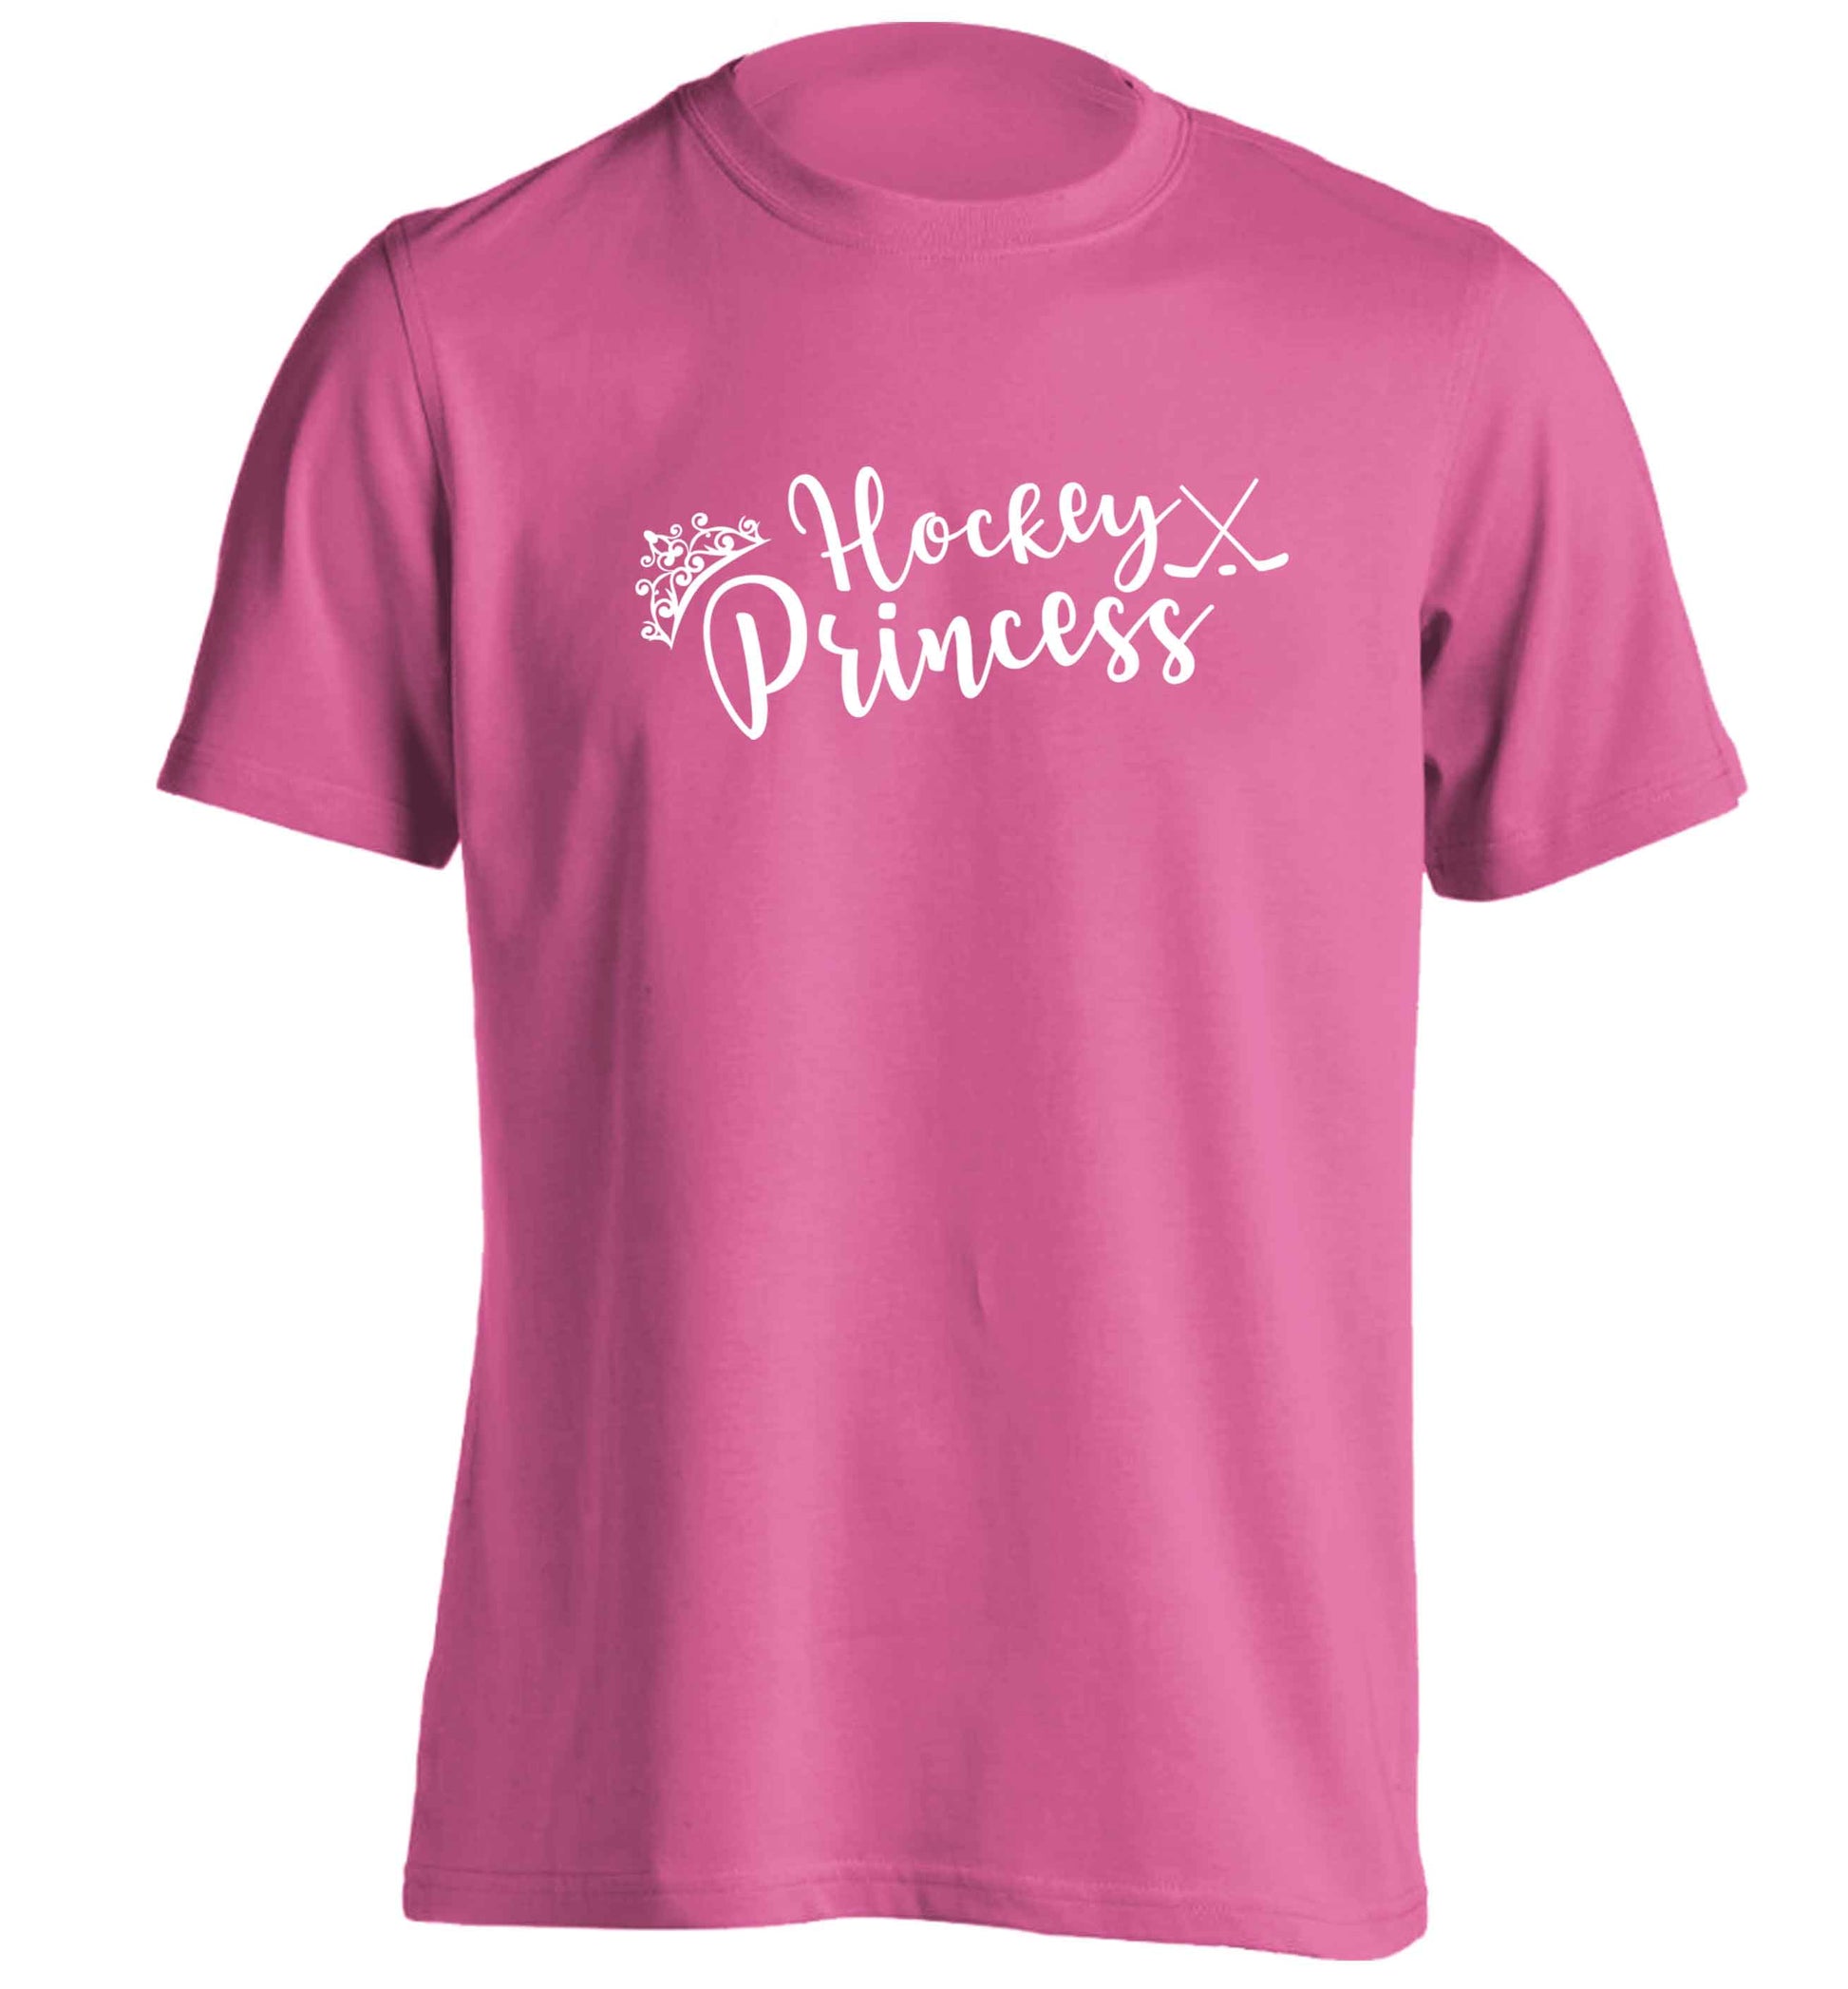 Hockey princess adults unisex pink Tshirt 2XL